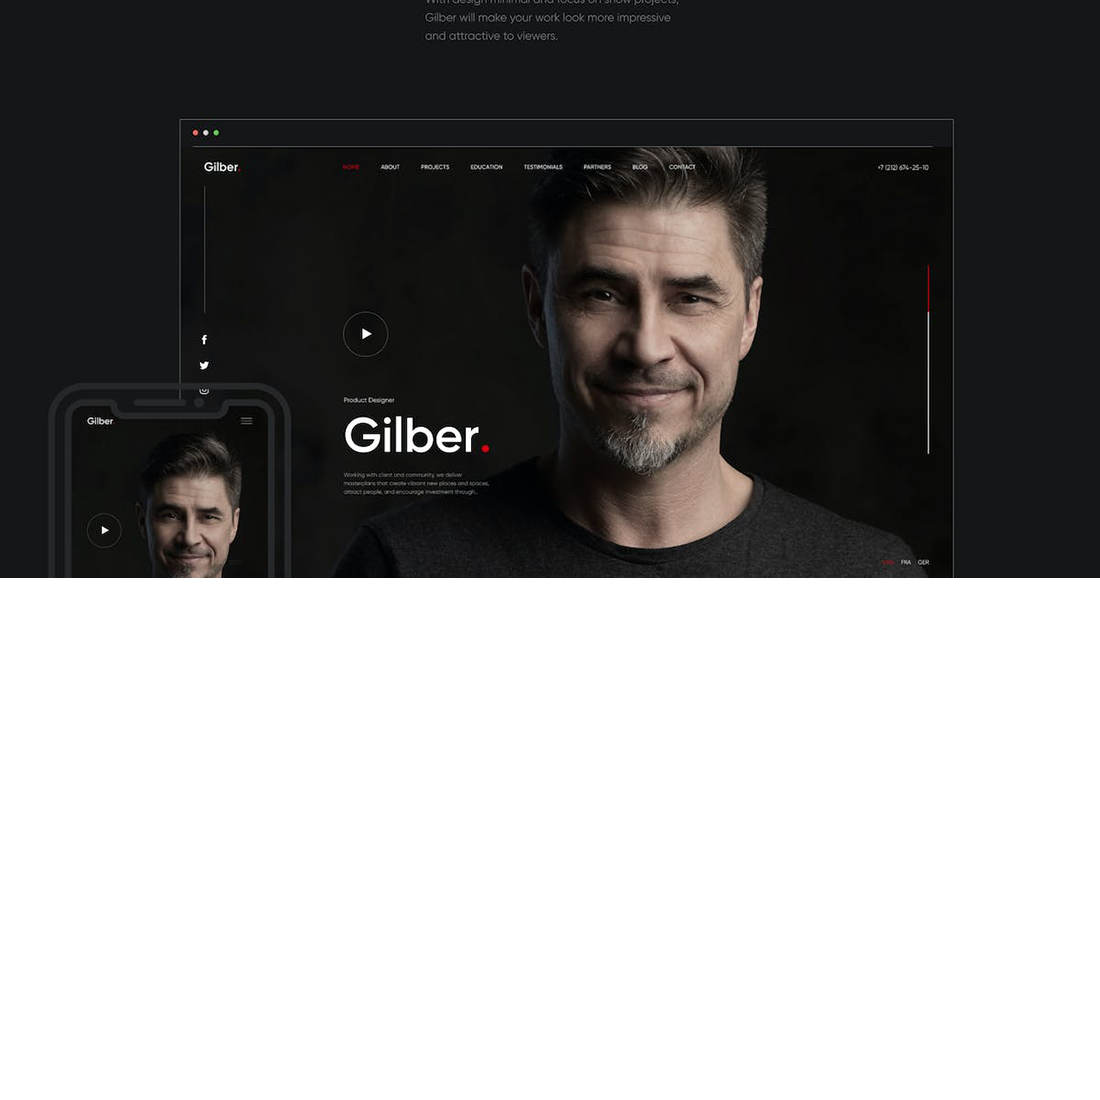 Free Gilber Personal Portfolio Template cover image.